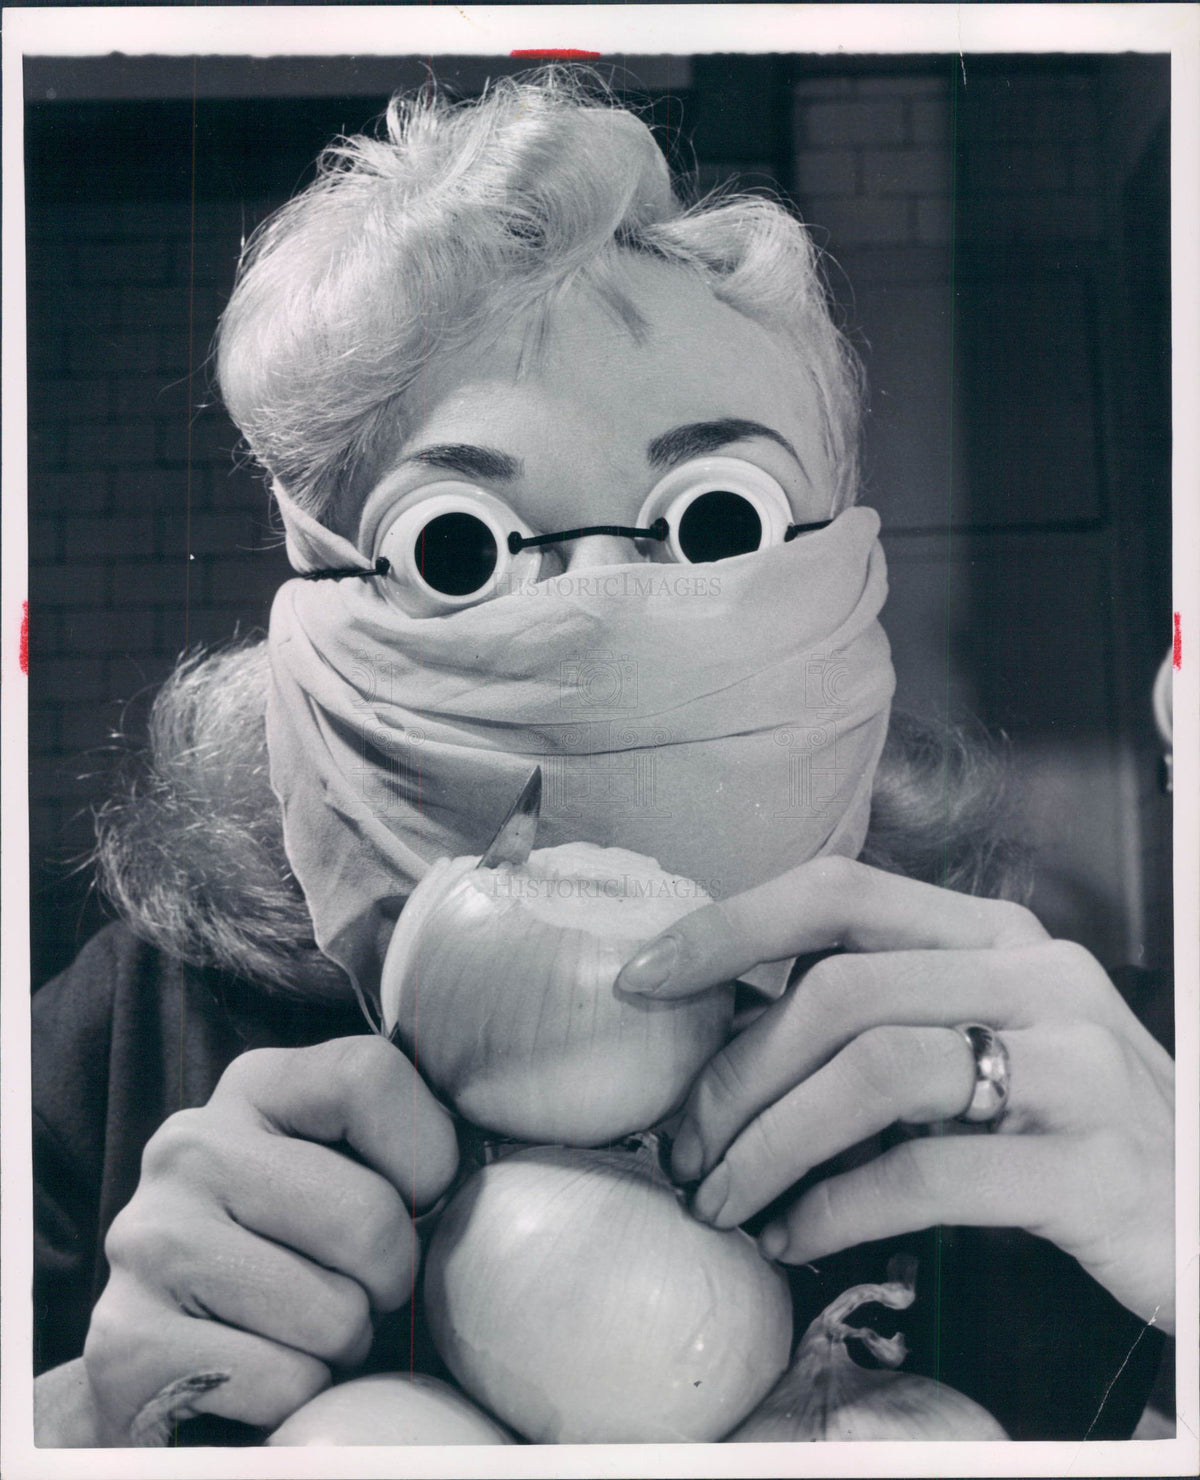 1957 Actress Edie Adams Press Photo - Historic Images